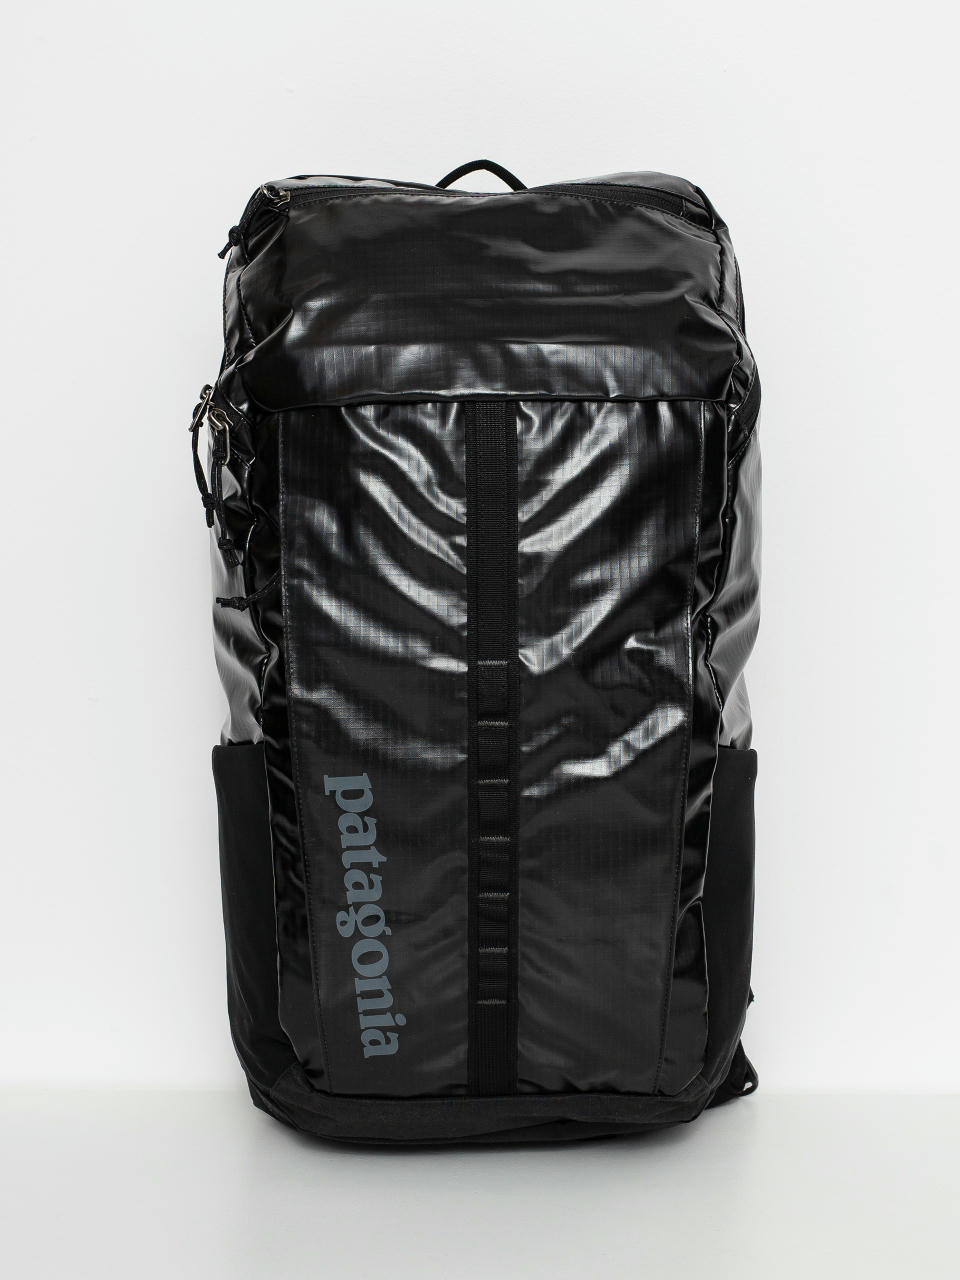 Patagonia Black Hole Pack 25L Backpack (rock cycle multi big light plume grey)